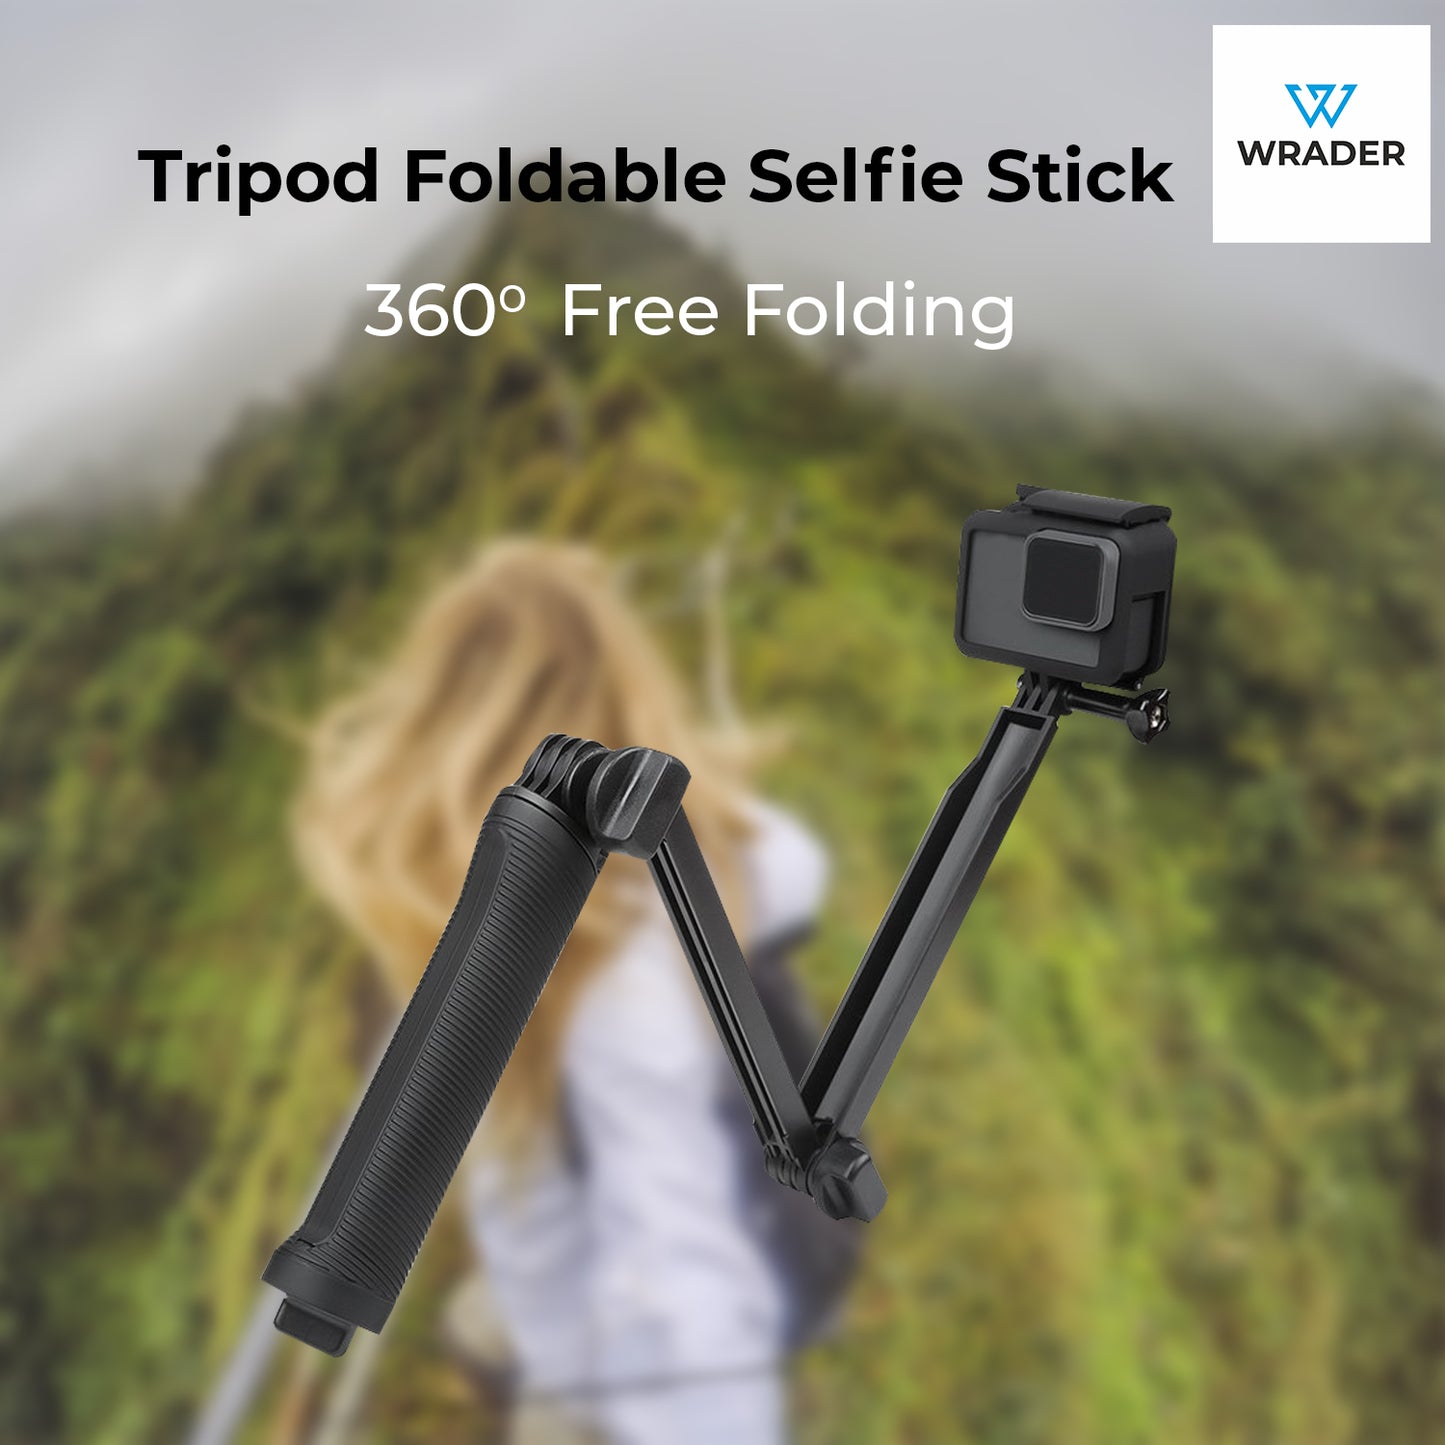 3-Way Grip Tripod, Go Pro Action Camera Tripod Hand Grip Extension Pole Monopod Kit